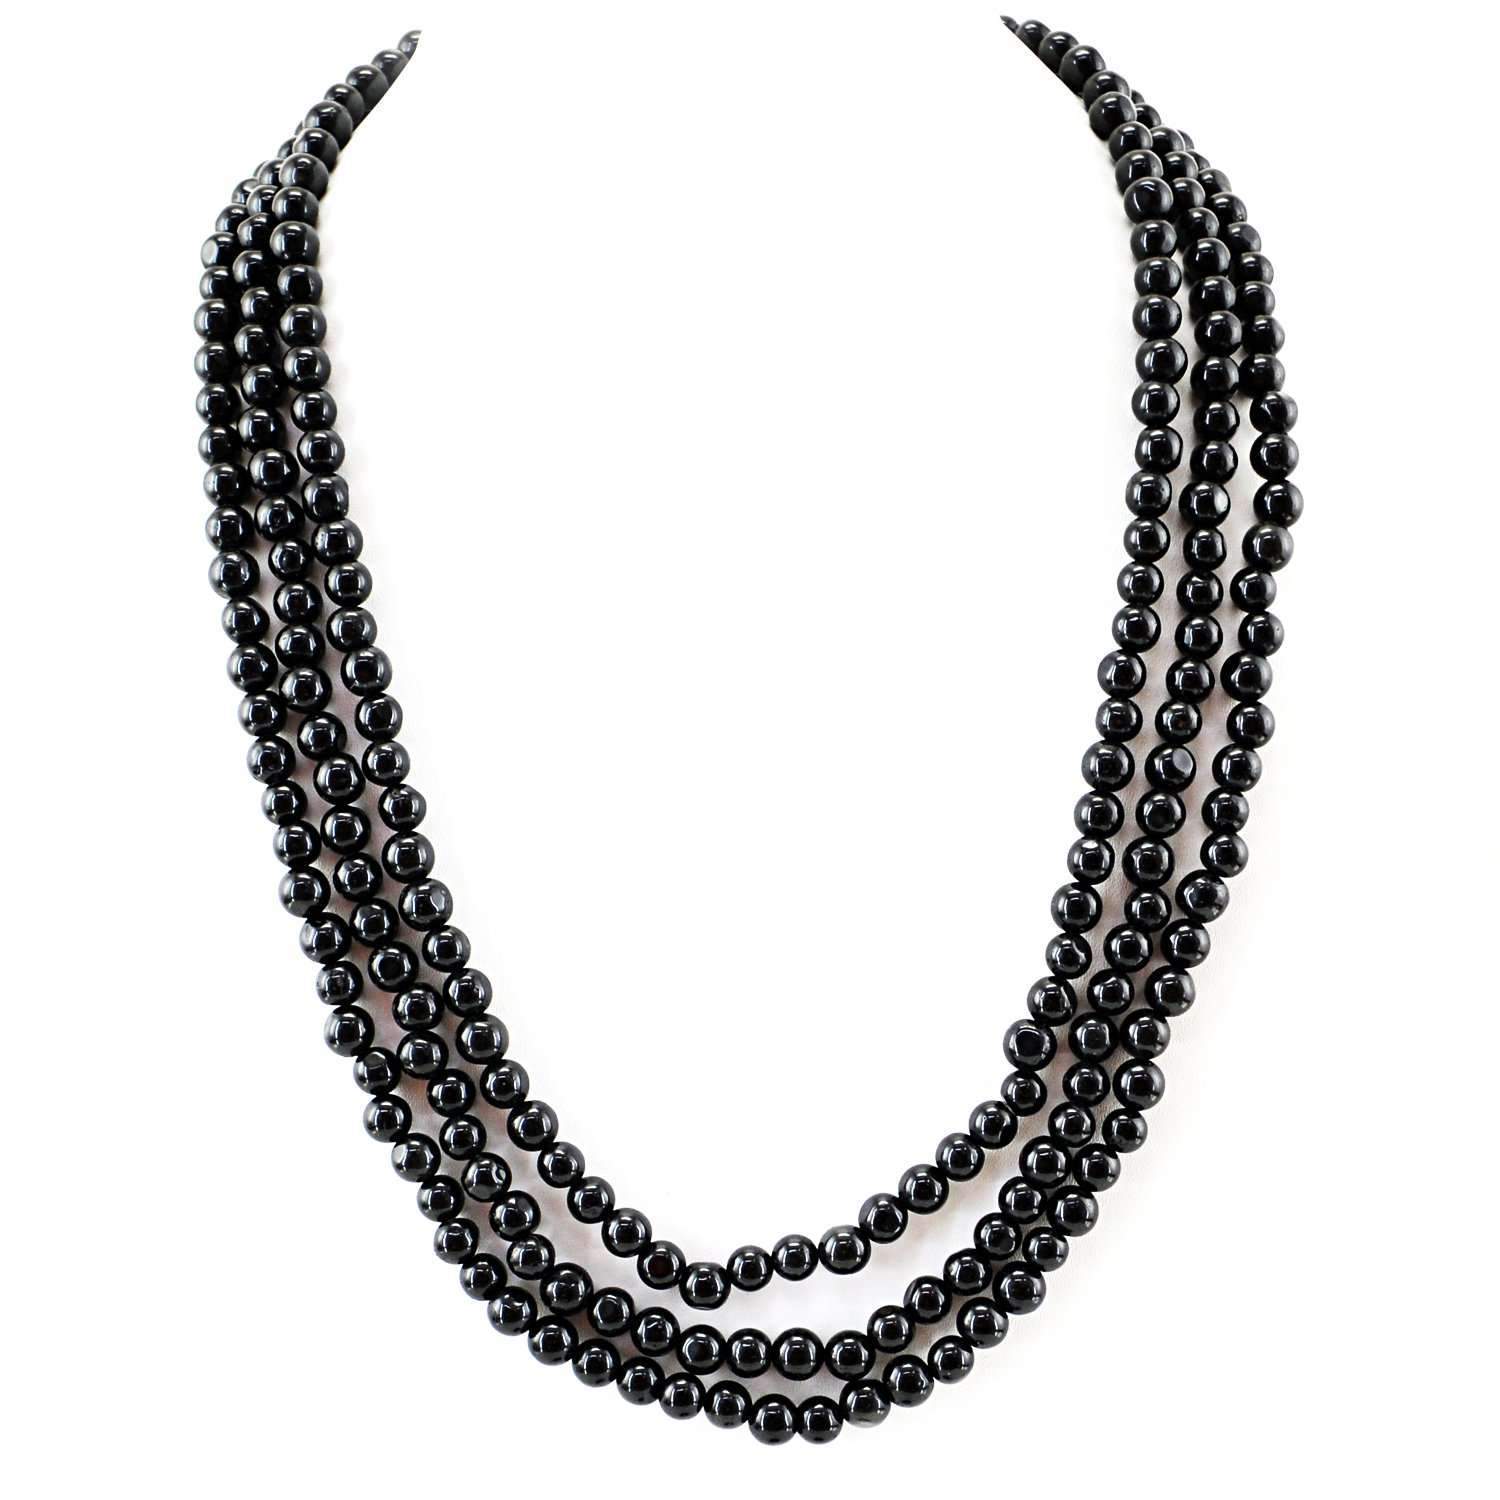 gemsmore:3 Strand Black Spinel Necklace Natural Round Shape Beads